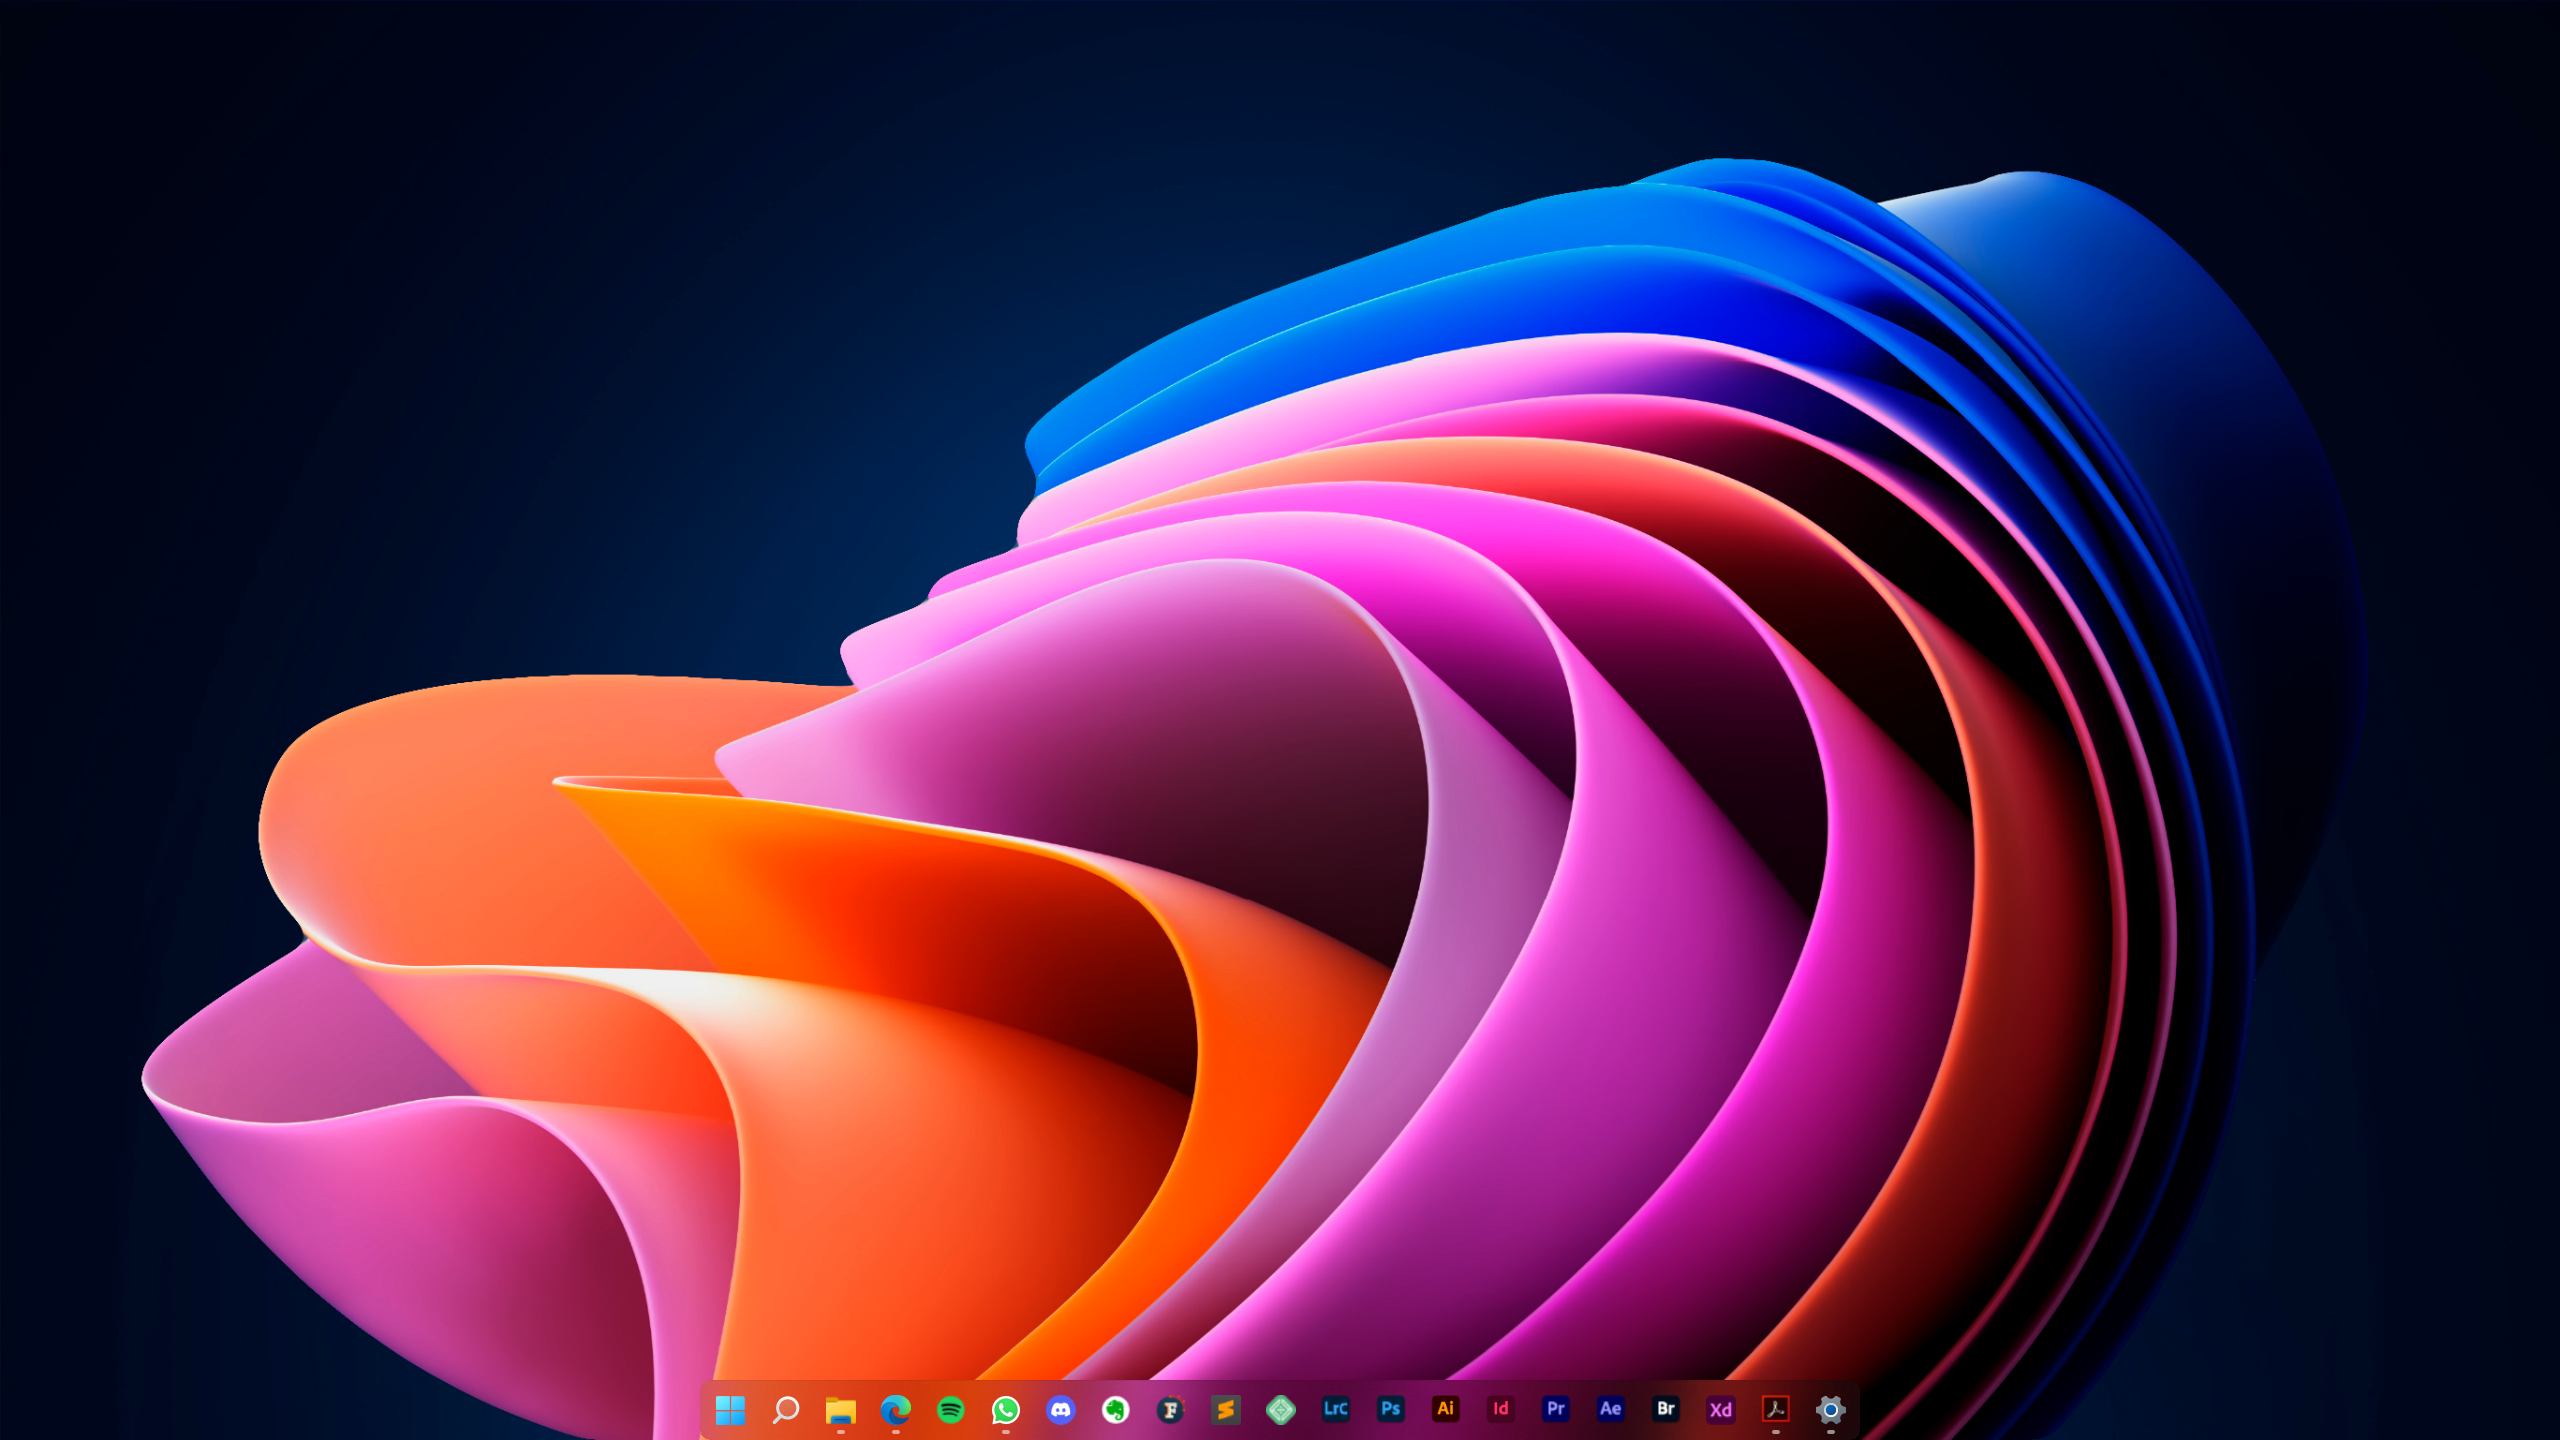 Windows 11 Wallpaper 4K, Dark aesthetic, Dark Mode, Waves